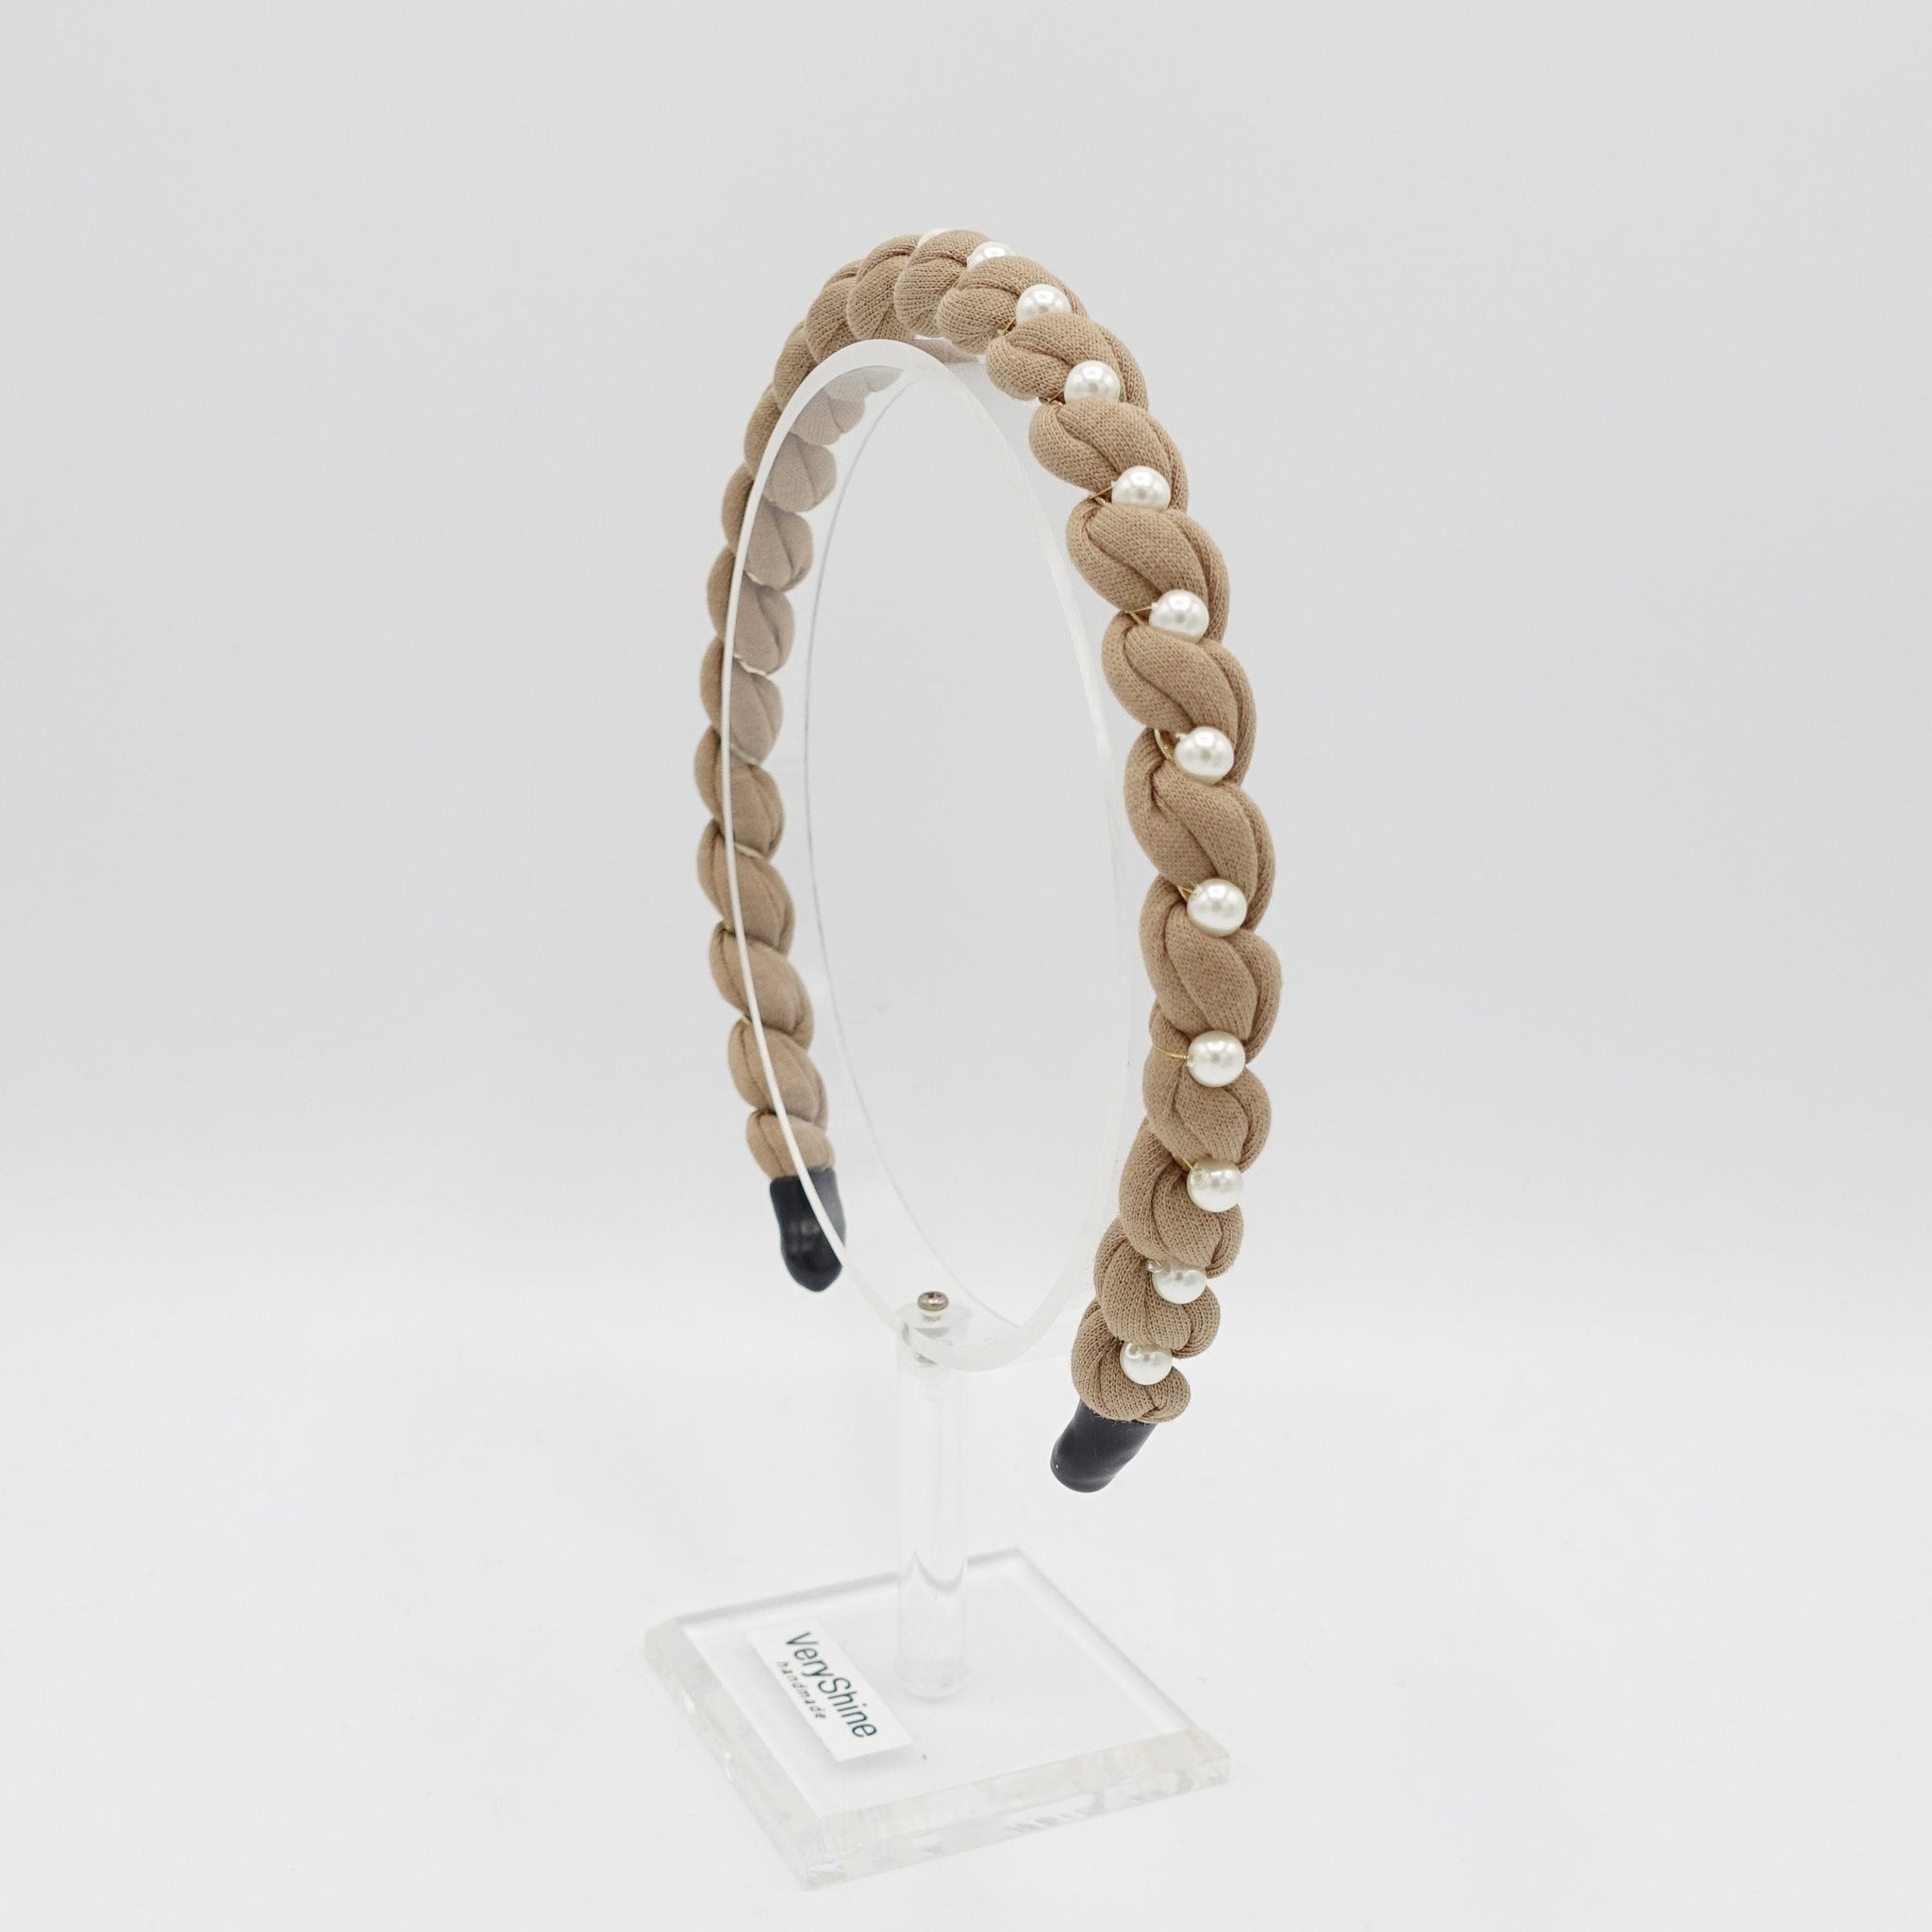 veryshine.com Headband pearl embellished cotton spiral wrap headband thin hairband women hair accessory